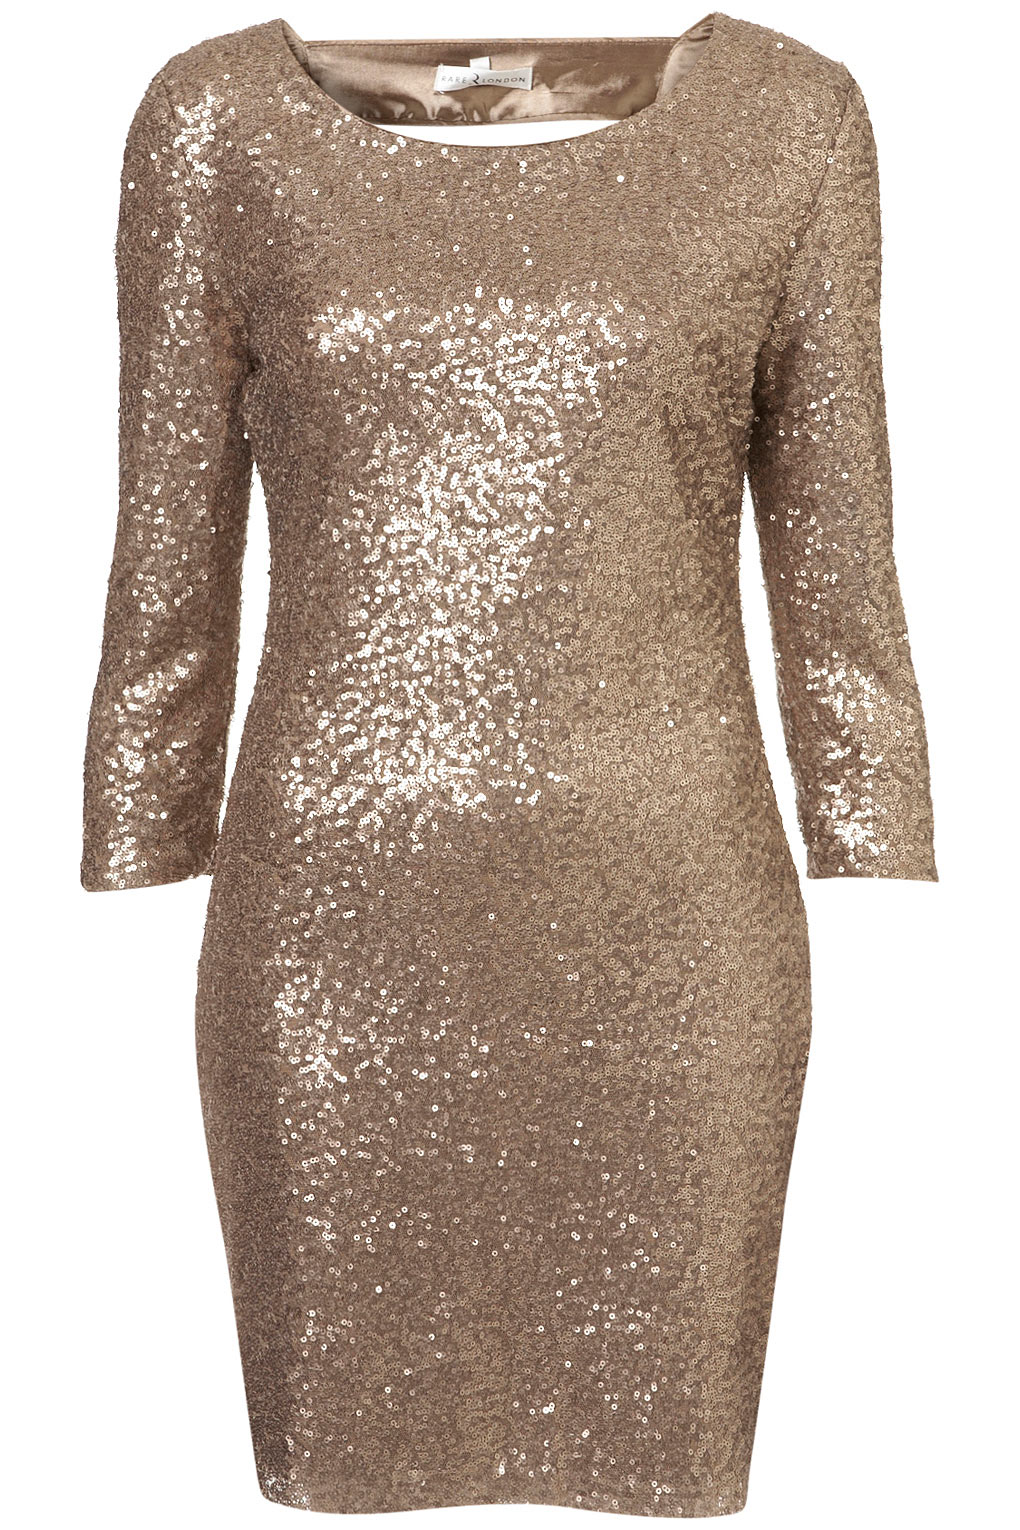 Topshop Sequin Bodycon Dress in Gold (bronze) | Lyst